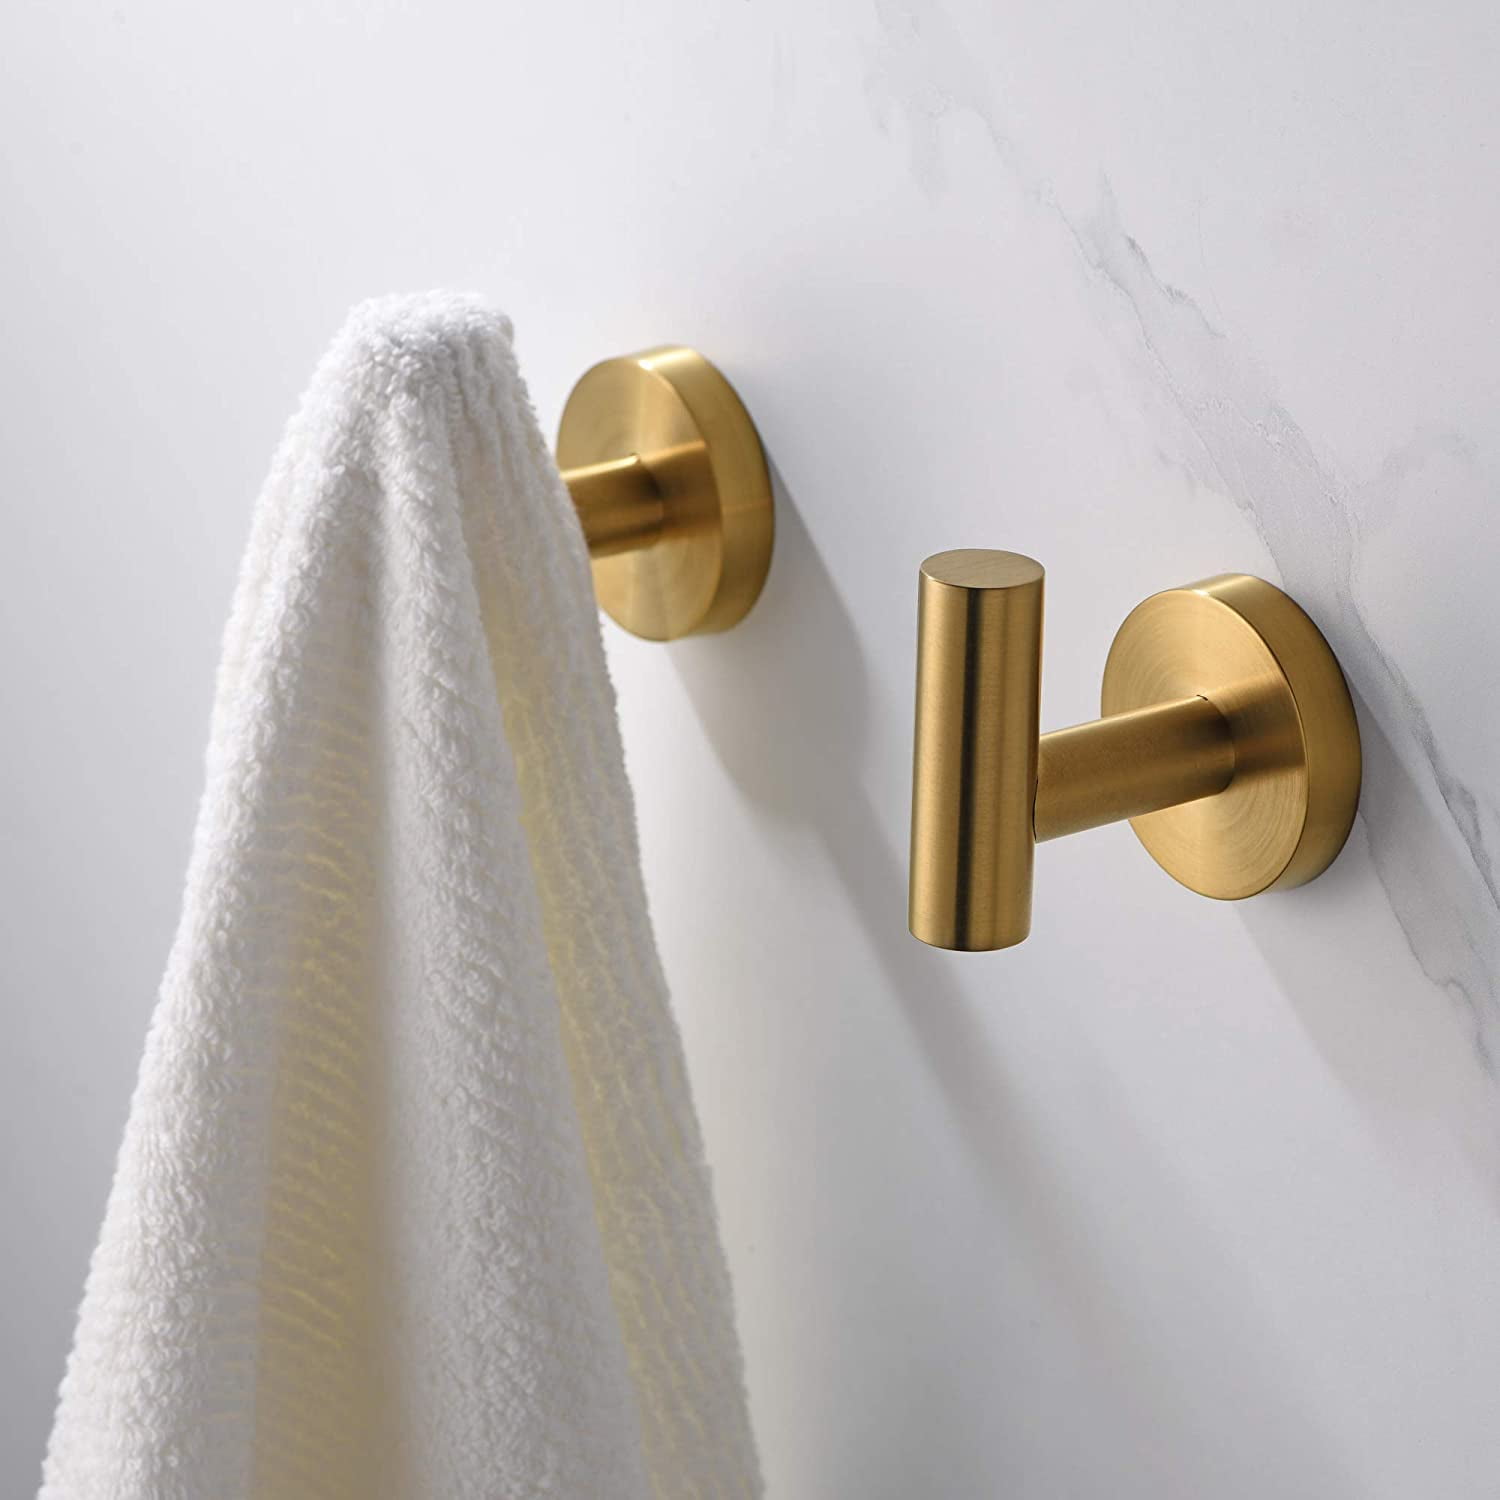 Gold Brass Wall Mounted Bathroom Towel Rack Coat Hooks Robe Hook Hanger Tools